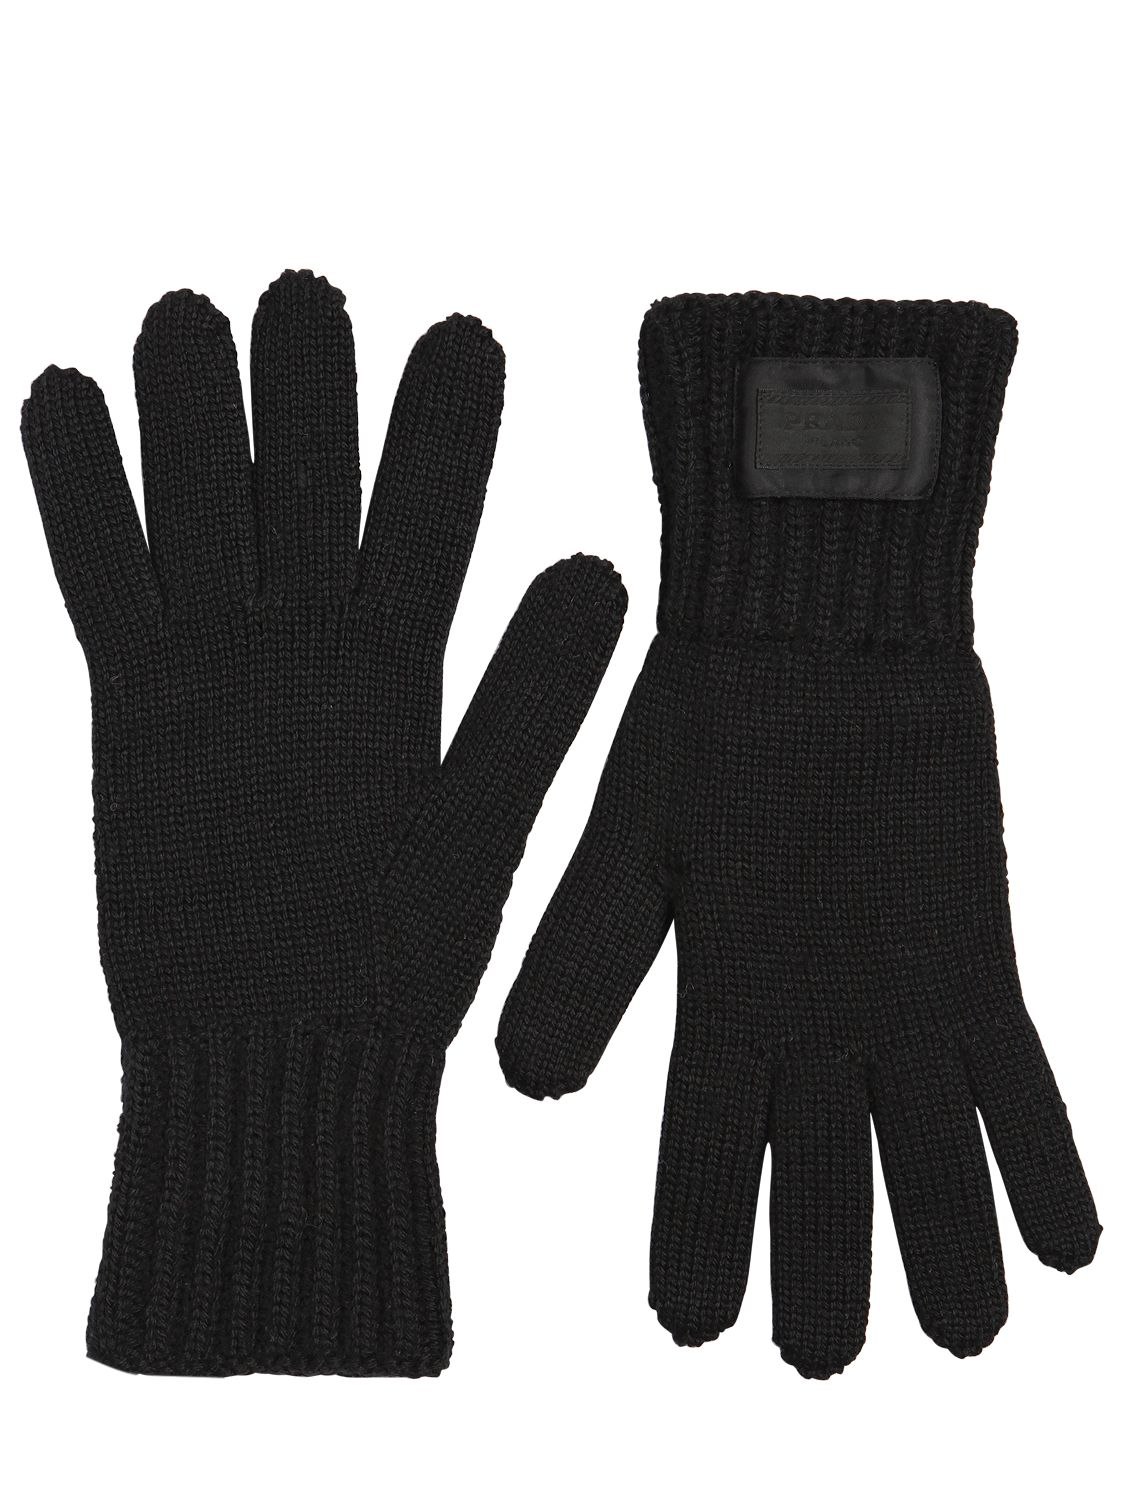 Wool Rib Knit Gloves | The Fashionisto